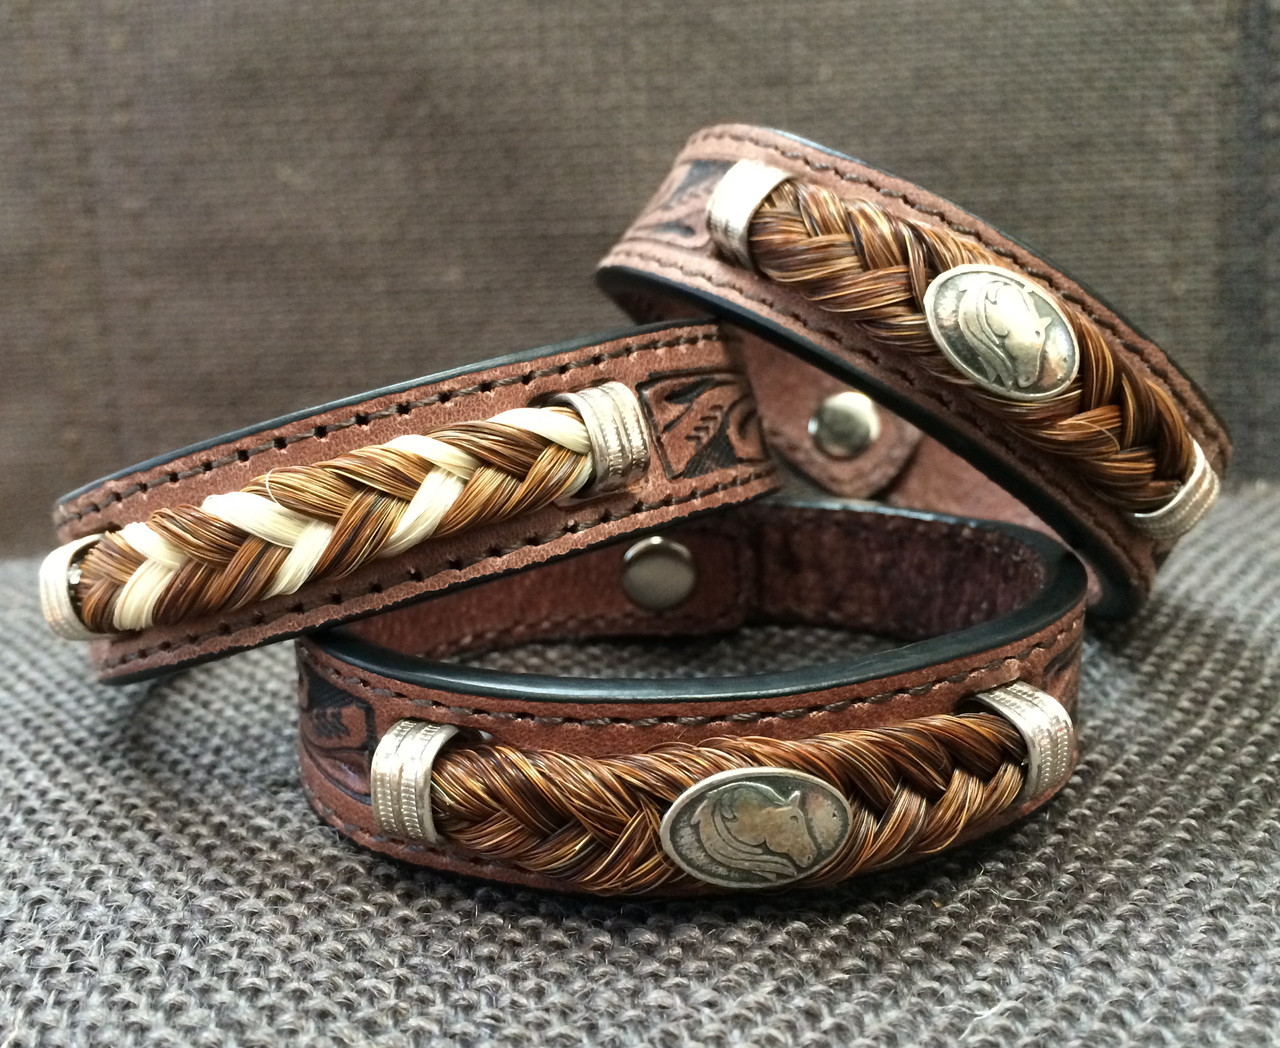 Leather Horsehair Bracelet